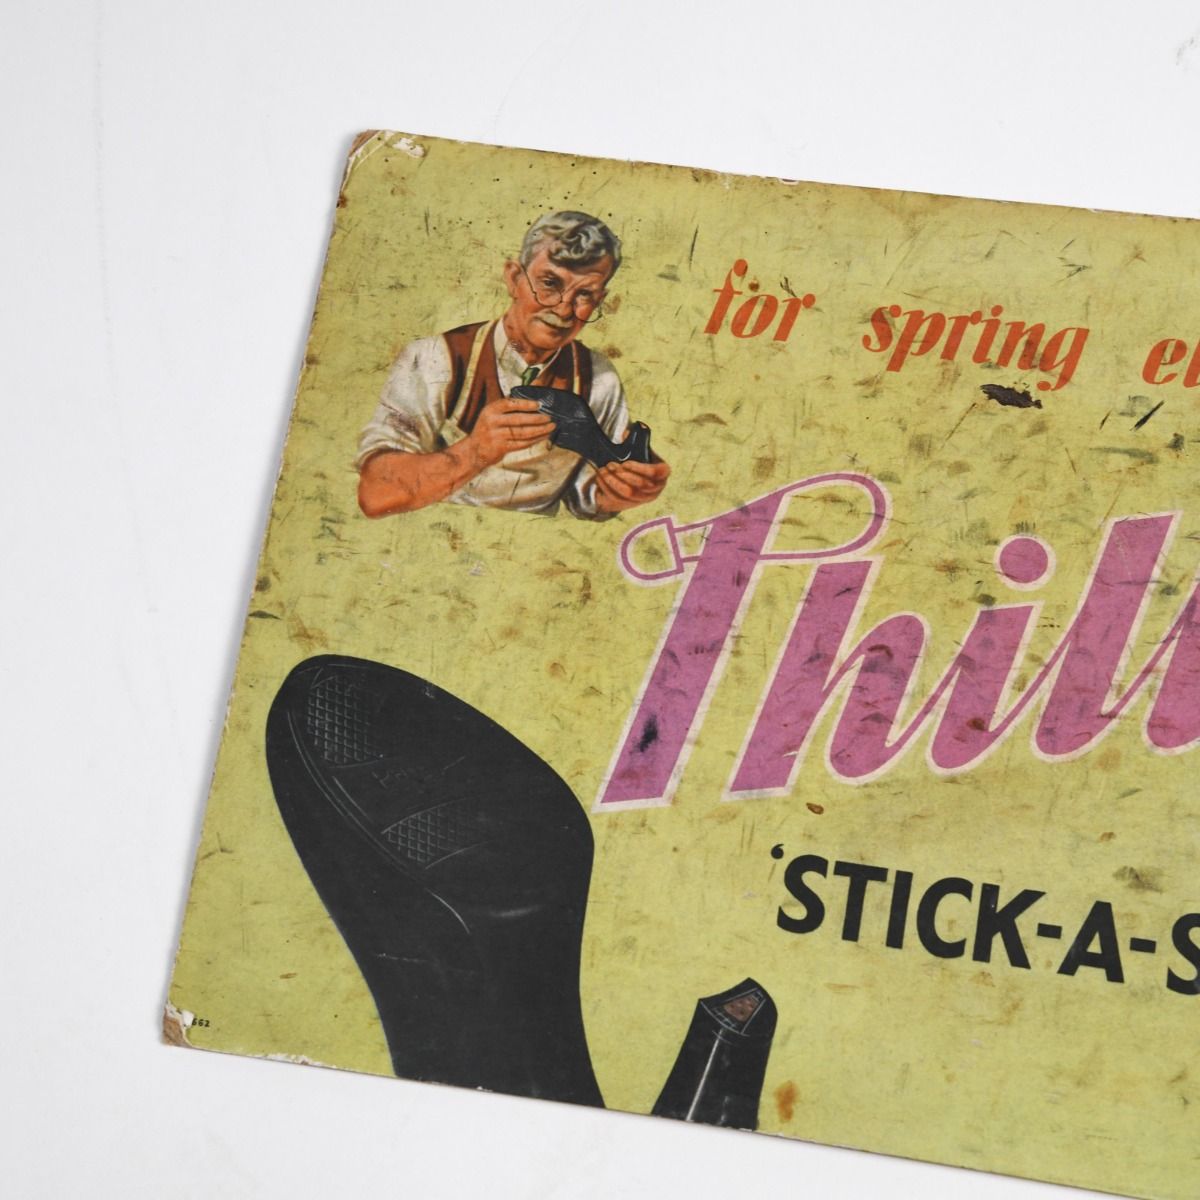 Vintage 1950s Phillips 'Stick A Soles & Heels' Shoe Shop Display Show Card